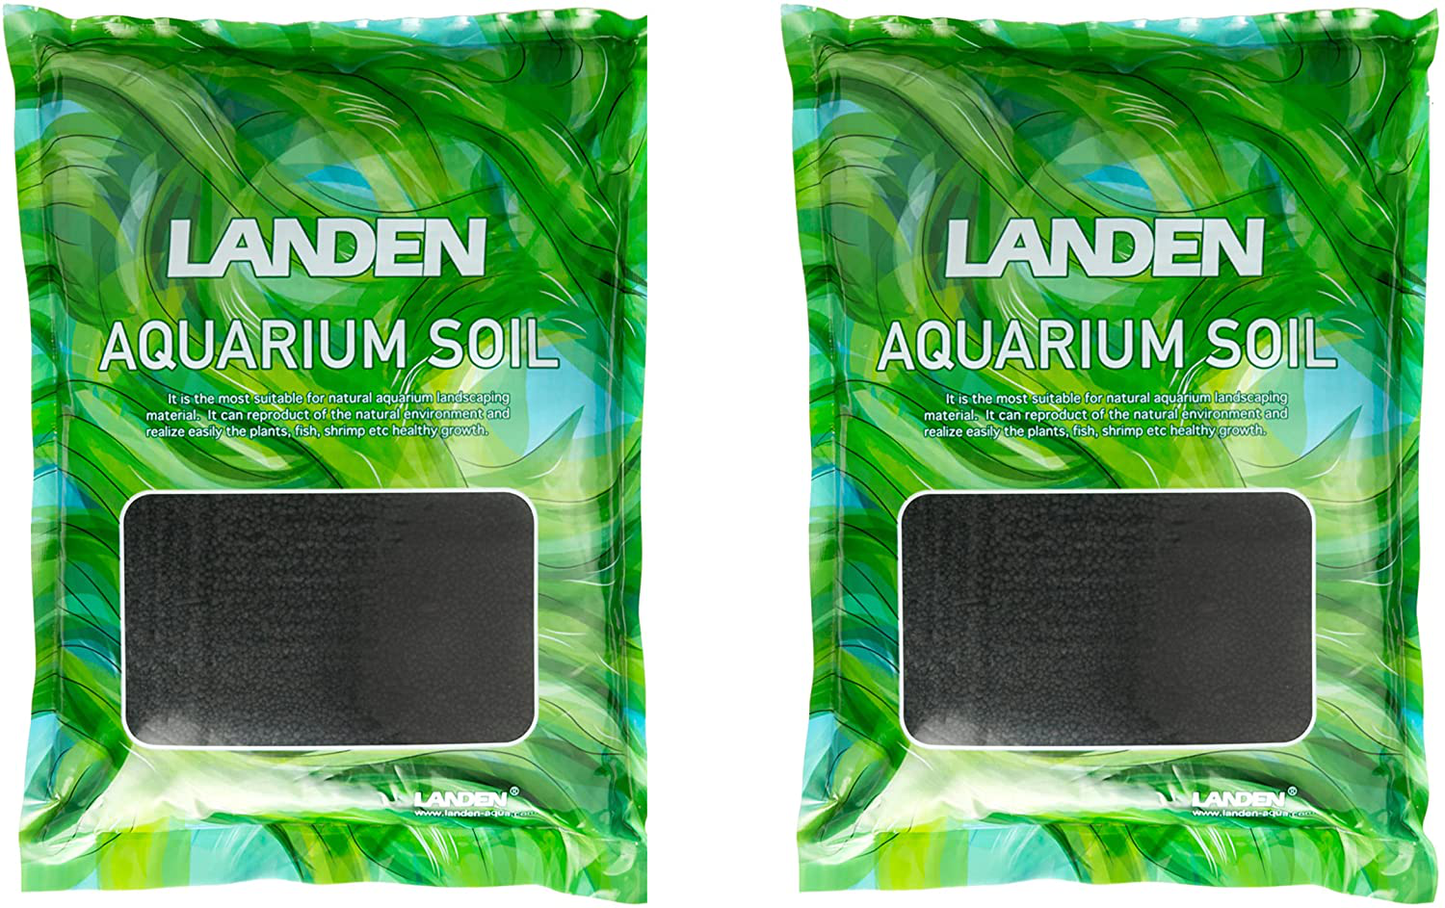 Landen Aqua Soil Substrate for Natural Planted Aquarium, Plant or Shrimp Stratum, Clay Gravel and Stable Porous Substrate for Freshwater Aquarium, Black Color